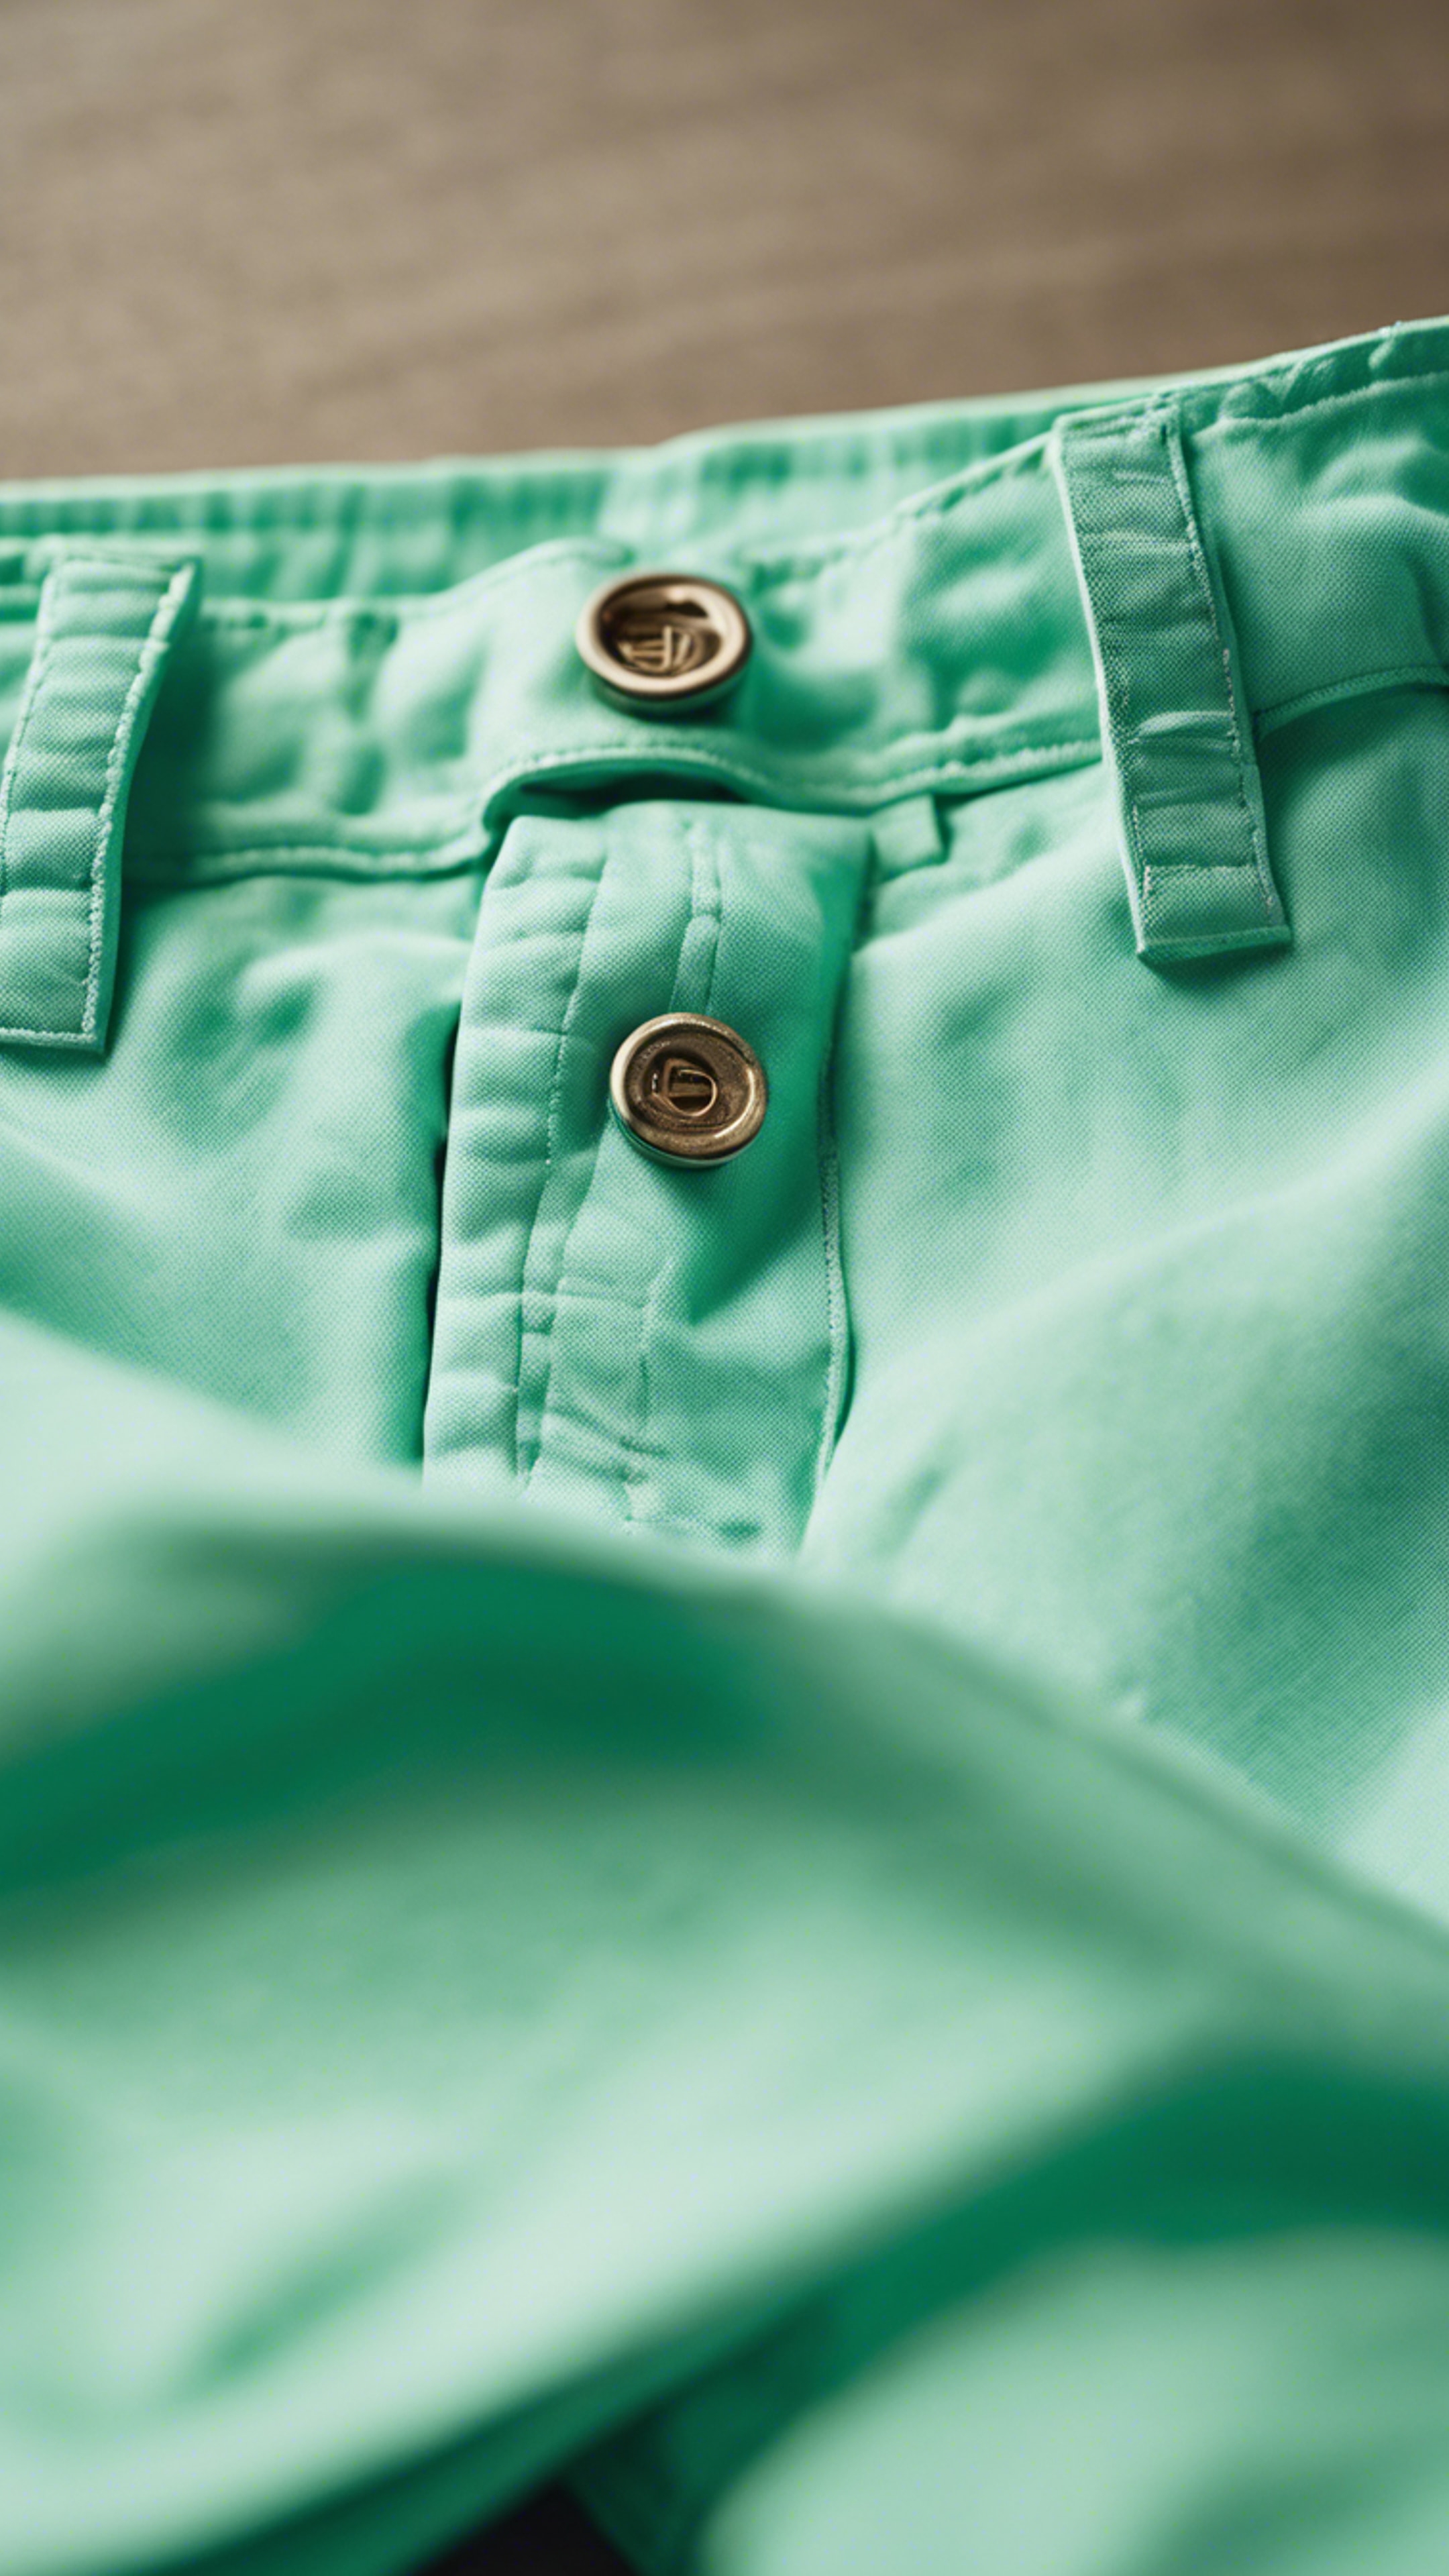 A pair of mint green chino shorts folding neatly, representing preppy fashion style.壁紙[bb5ad74ddabe489792cb]